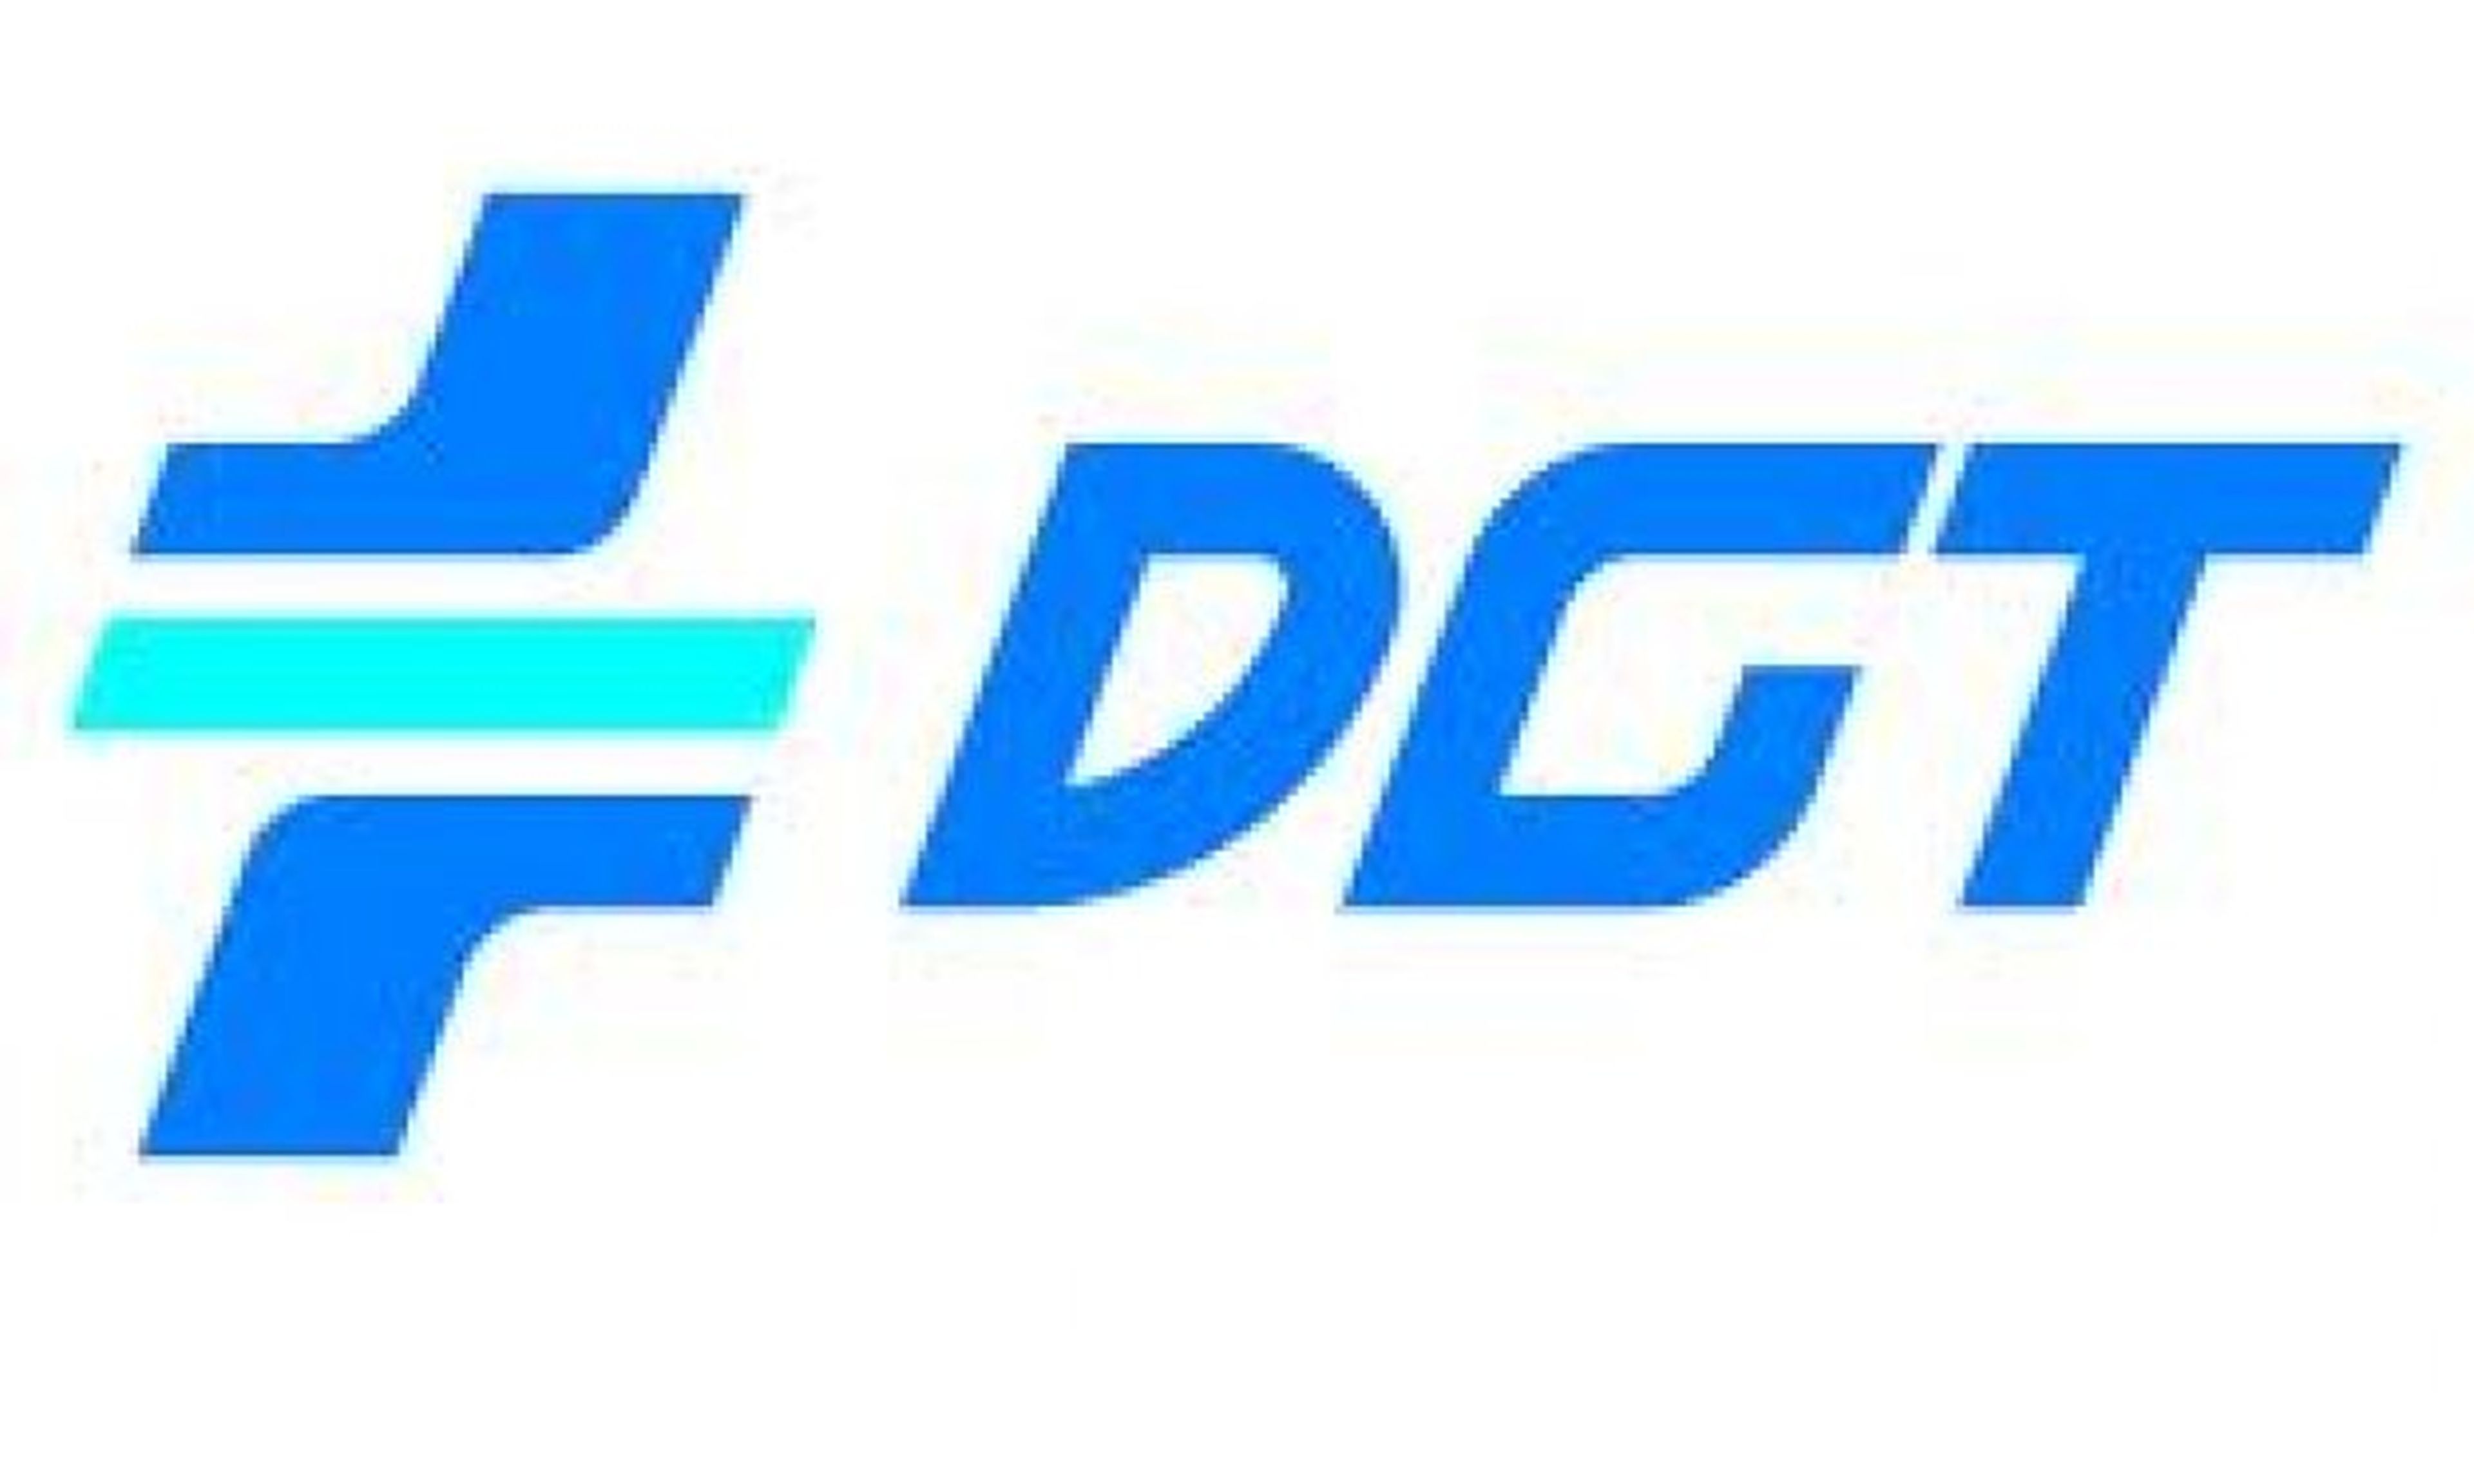 La DGT destina 8,4 millones de euros a publicidad